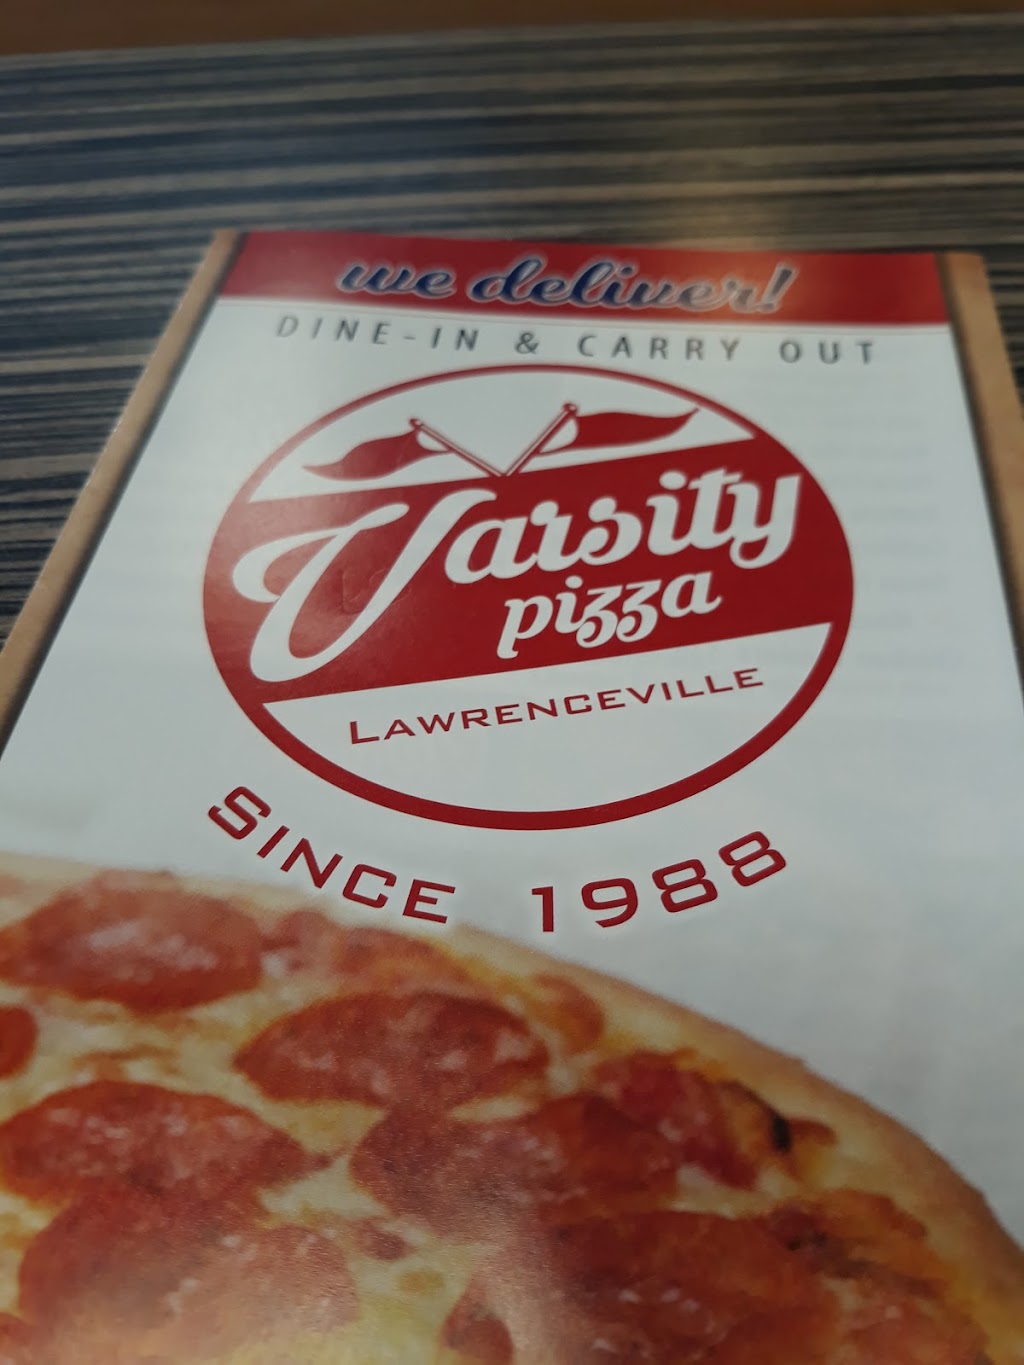 Varsity Pizza & Subs | 1296 Lawrenceville Rd, Lawrenceville, NJ 08648 | Phone: (609) 882-4100